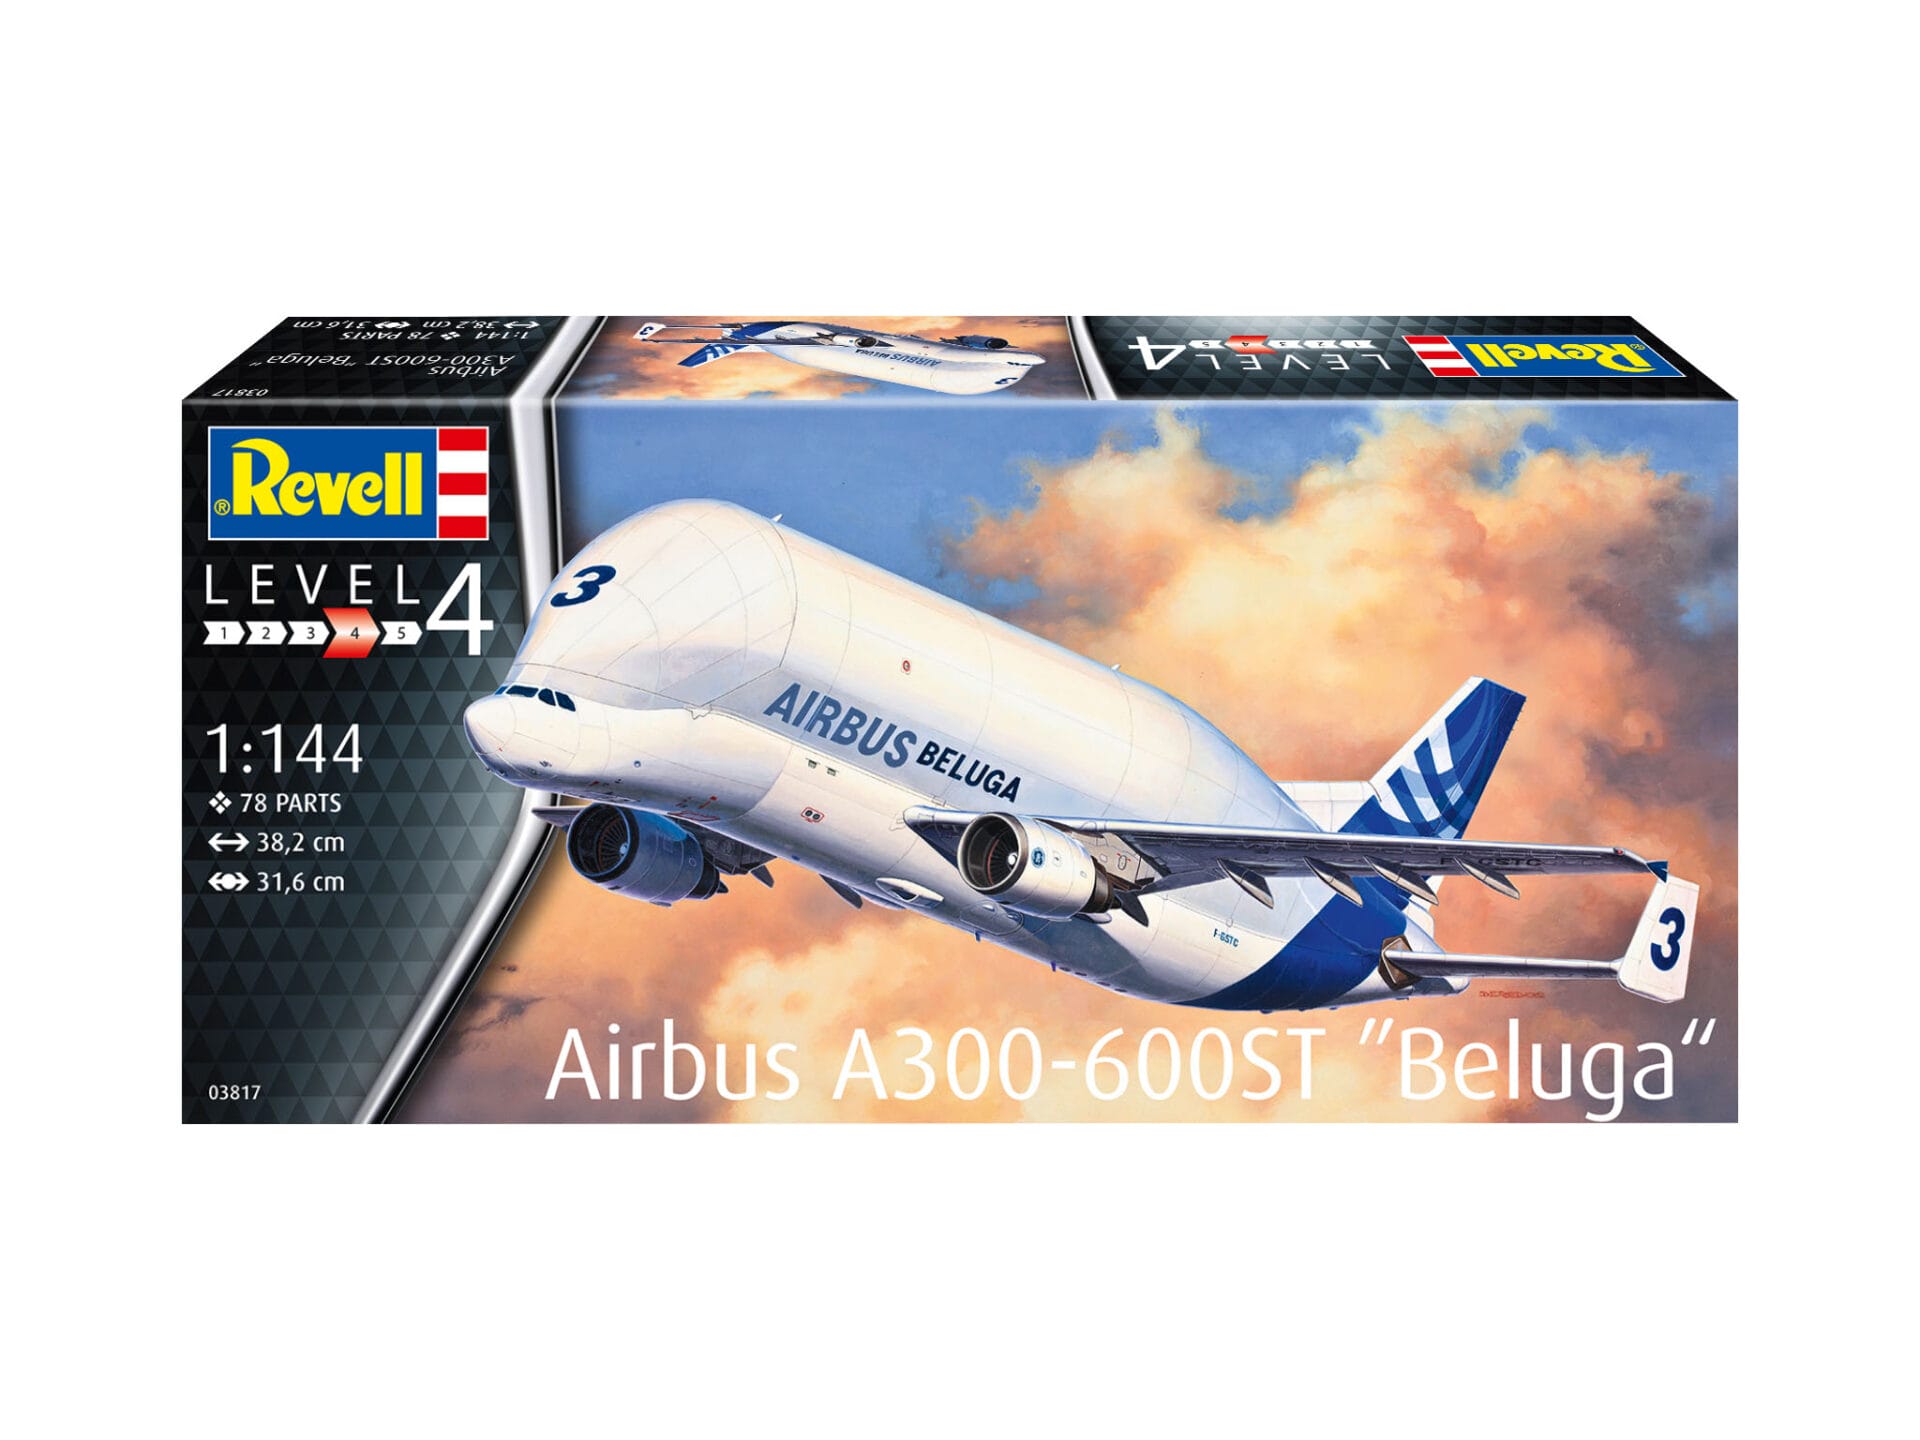 revell - 1:144 airbus a300-600st "beluga" (03817) model kit